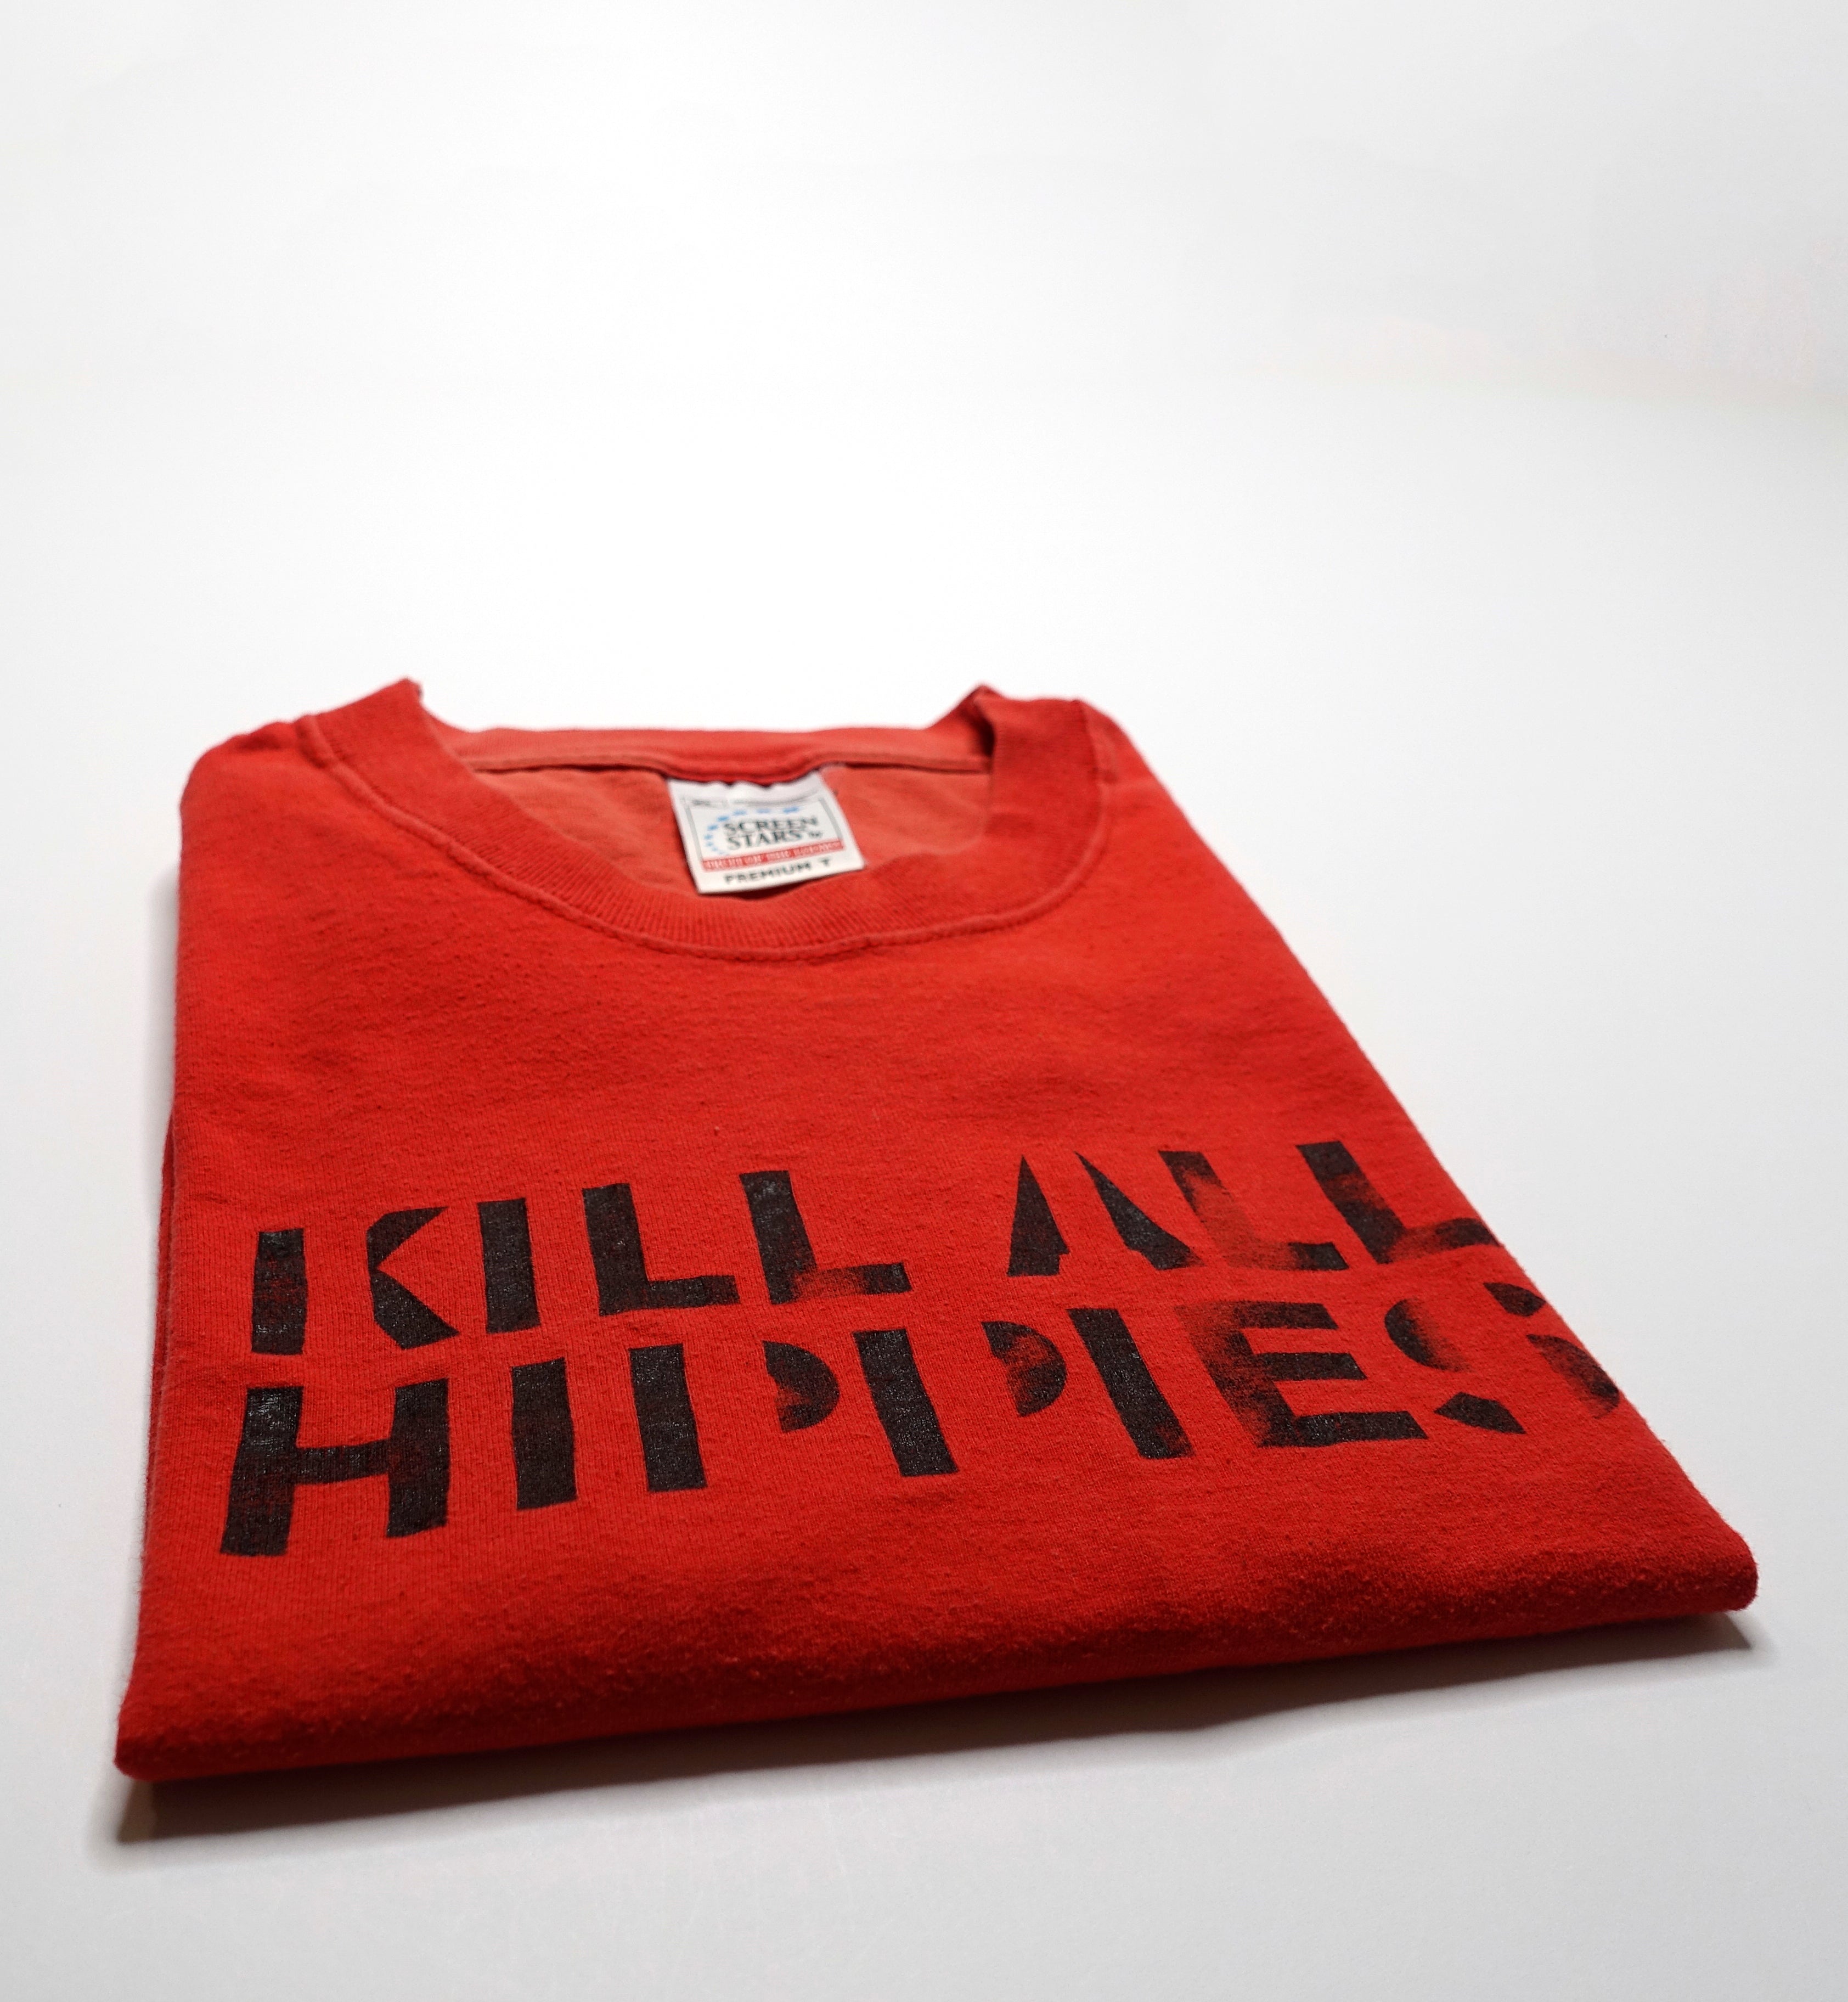 Primal Scream ‎– KILL ALL HIPPIES 2000 Tour Shirt Size XL